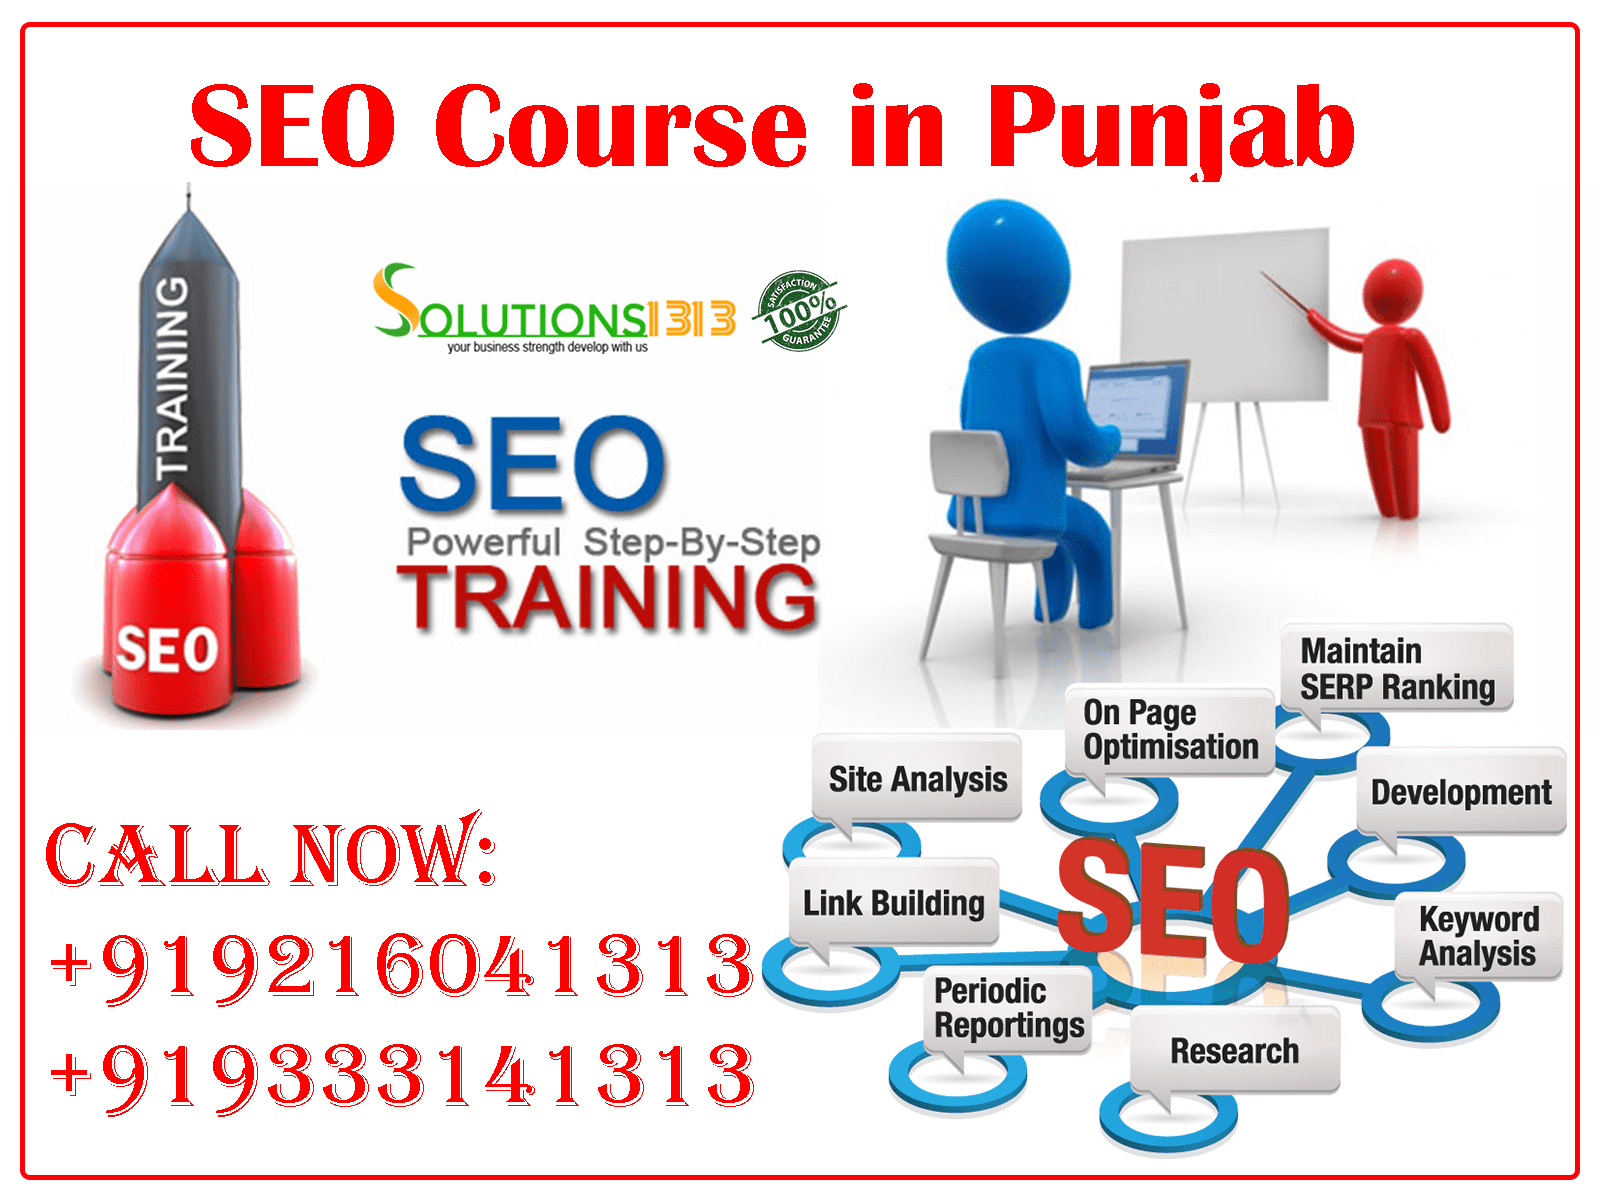 SEO Course in Punjab